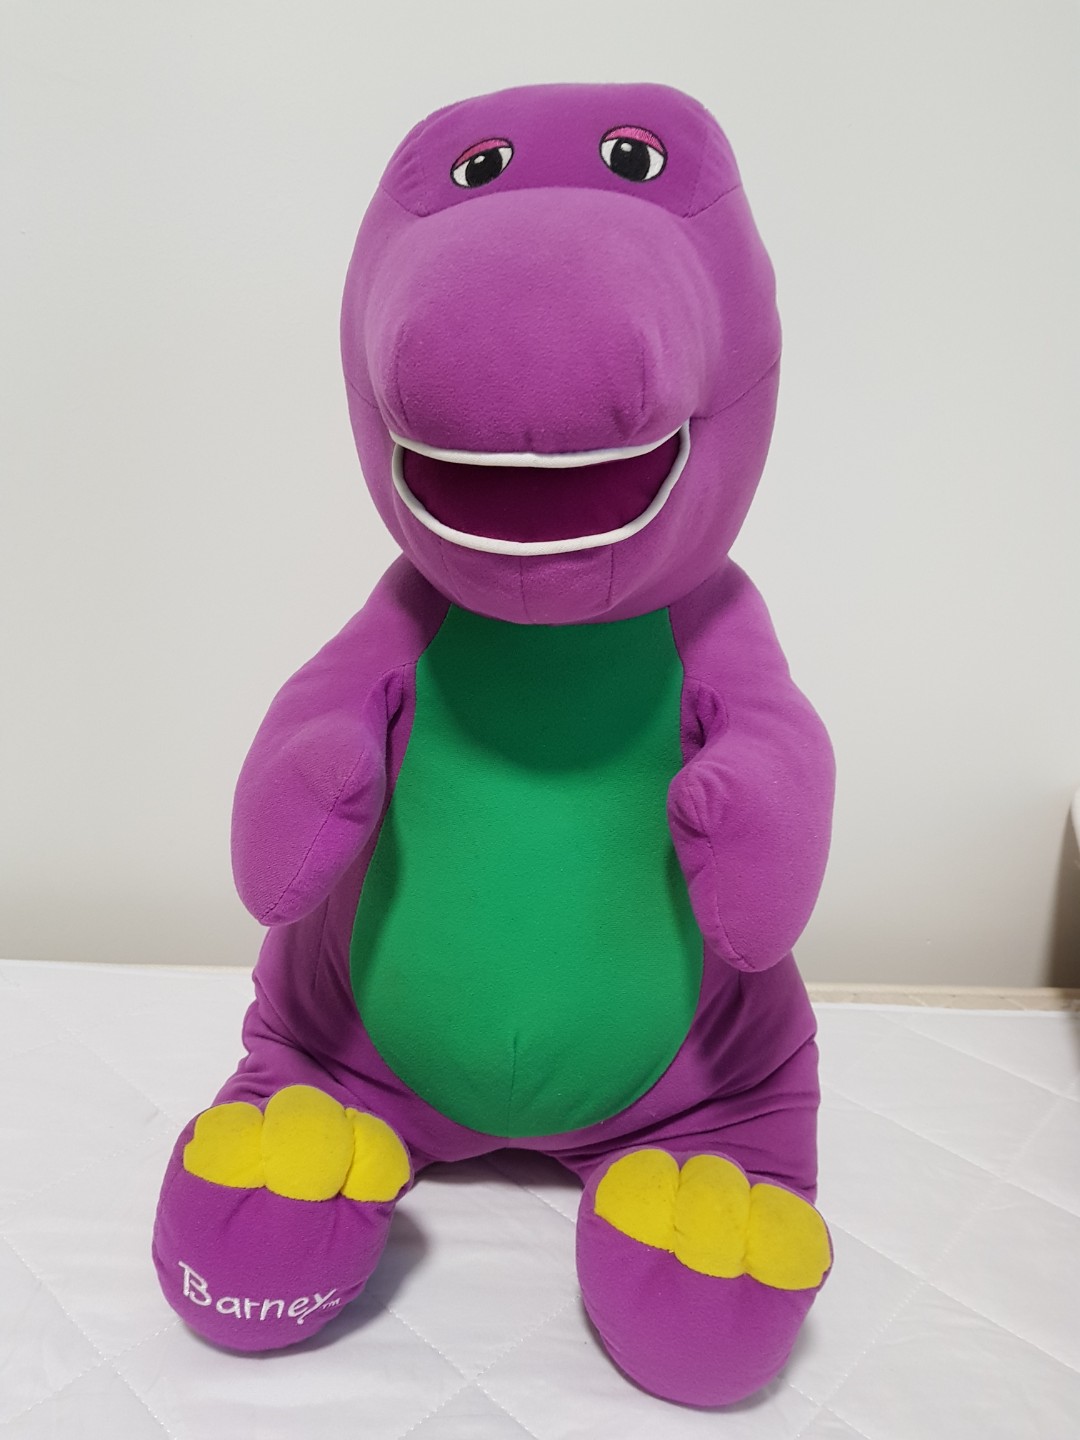 Barney Toys Plush Dolls Games